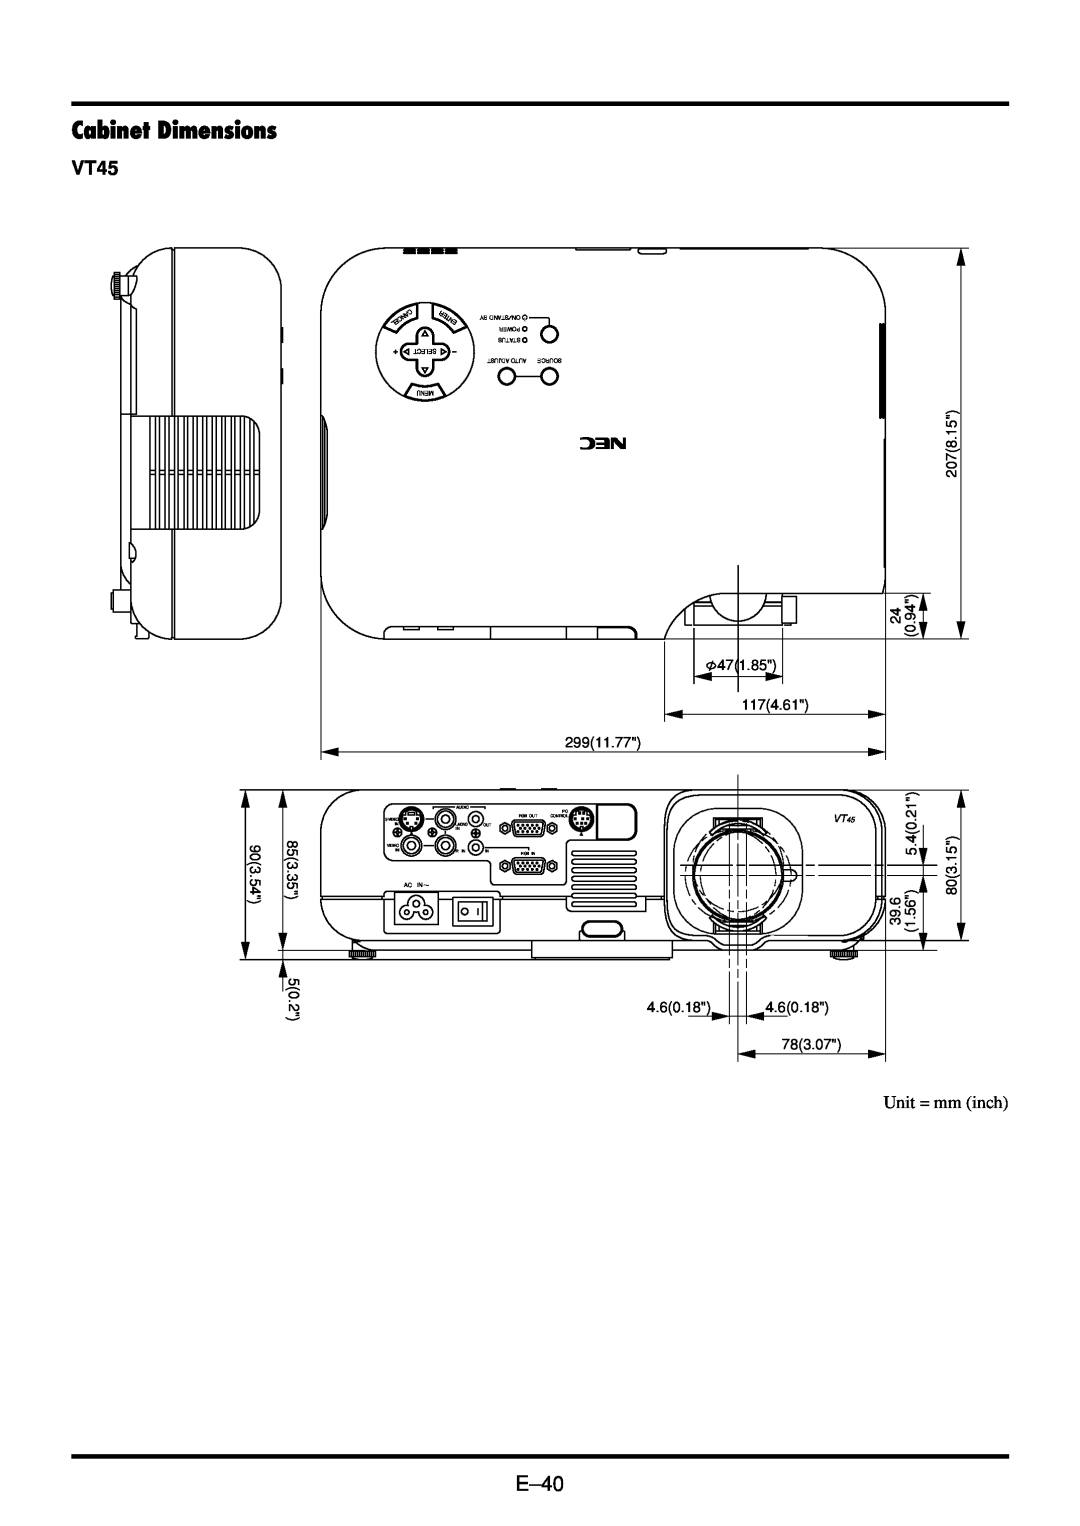 NEC VT45 user manual Cabinet Dimensions, Enter, Select Adjust Auto Source Menu 